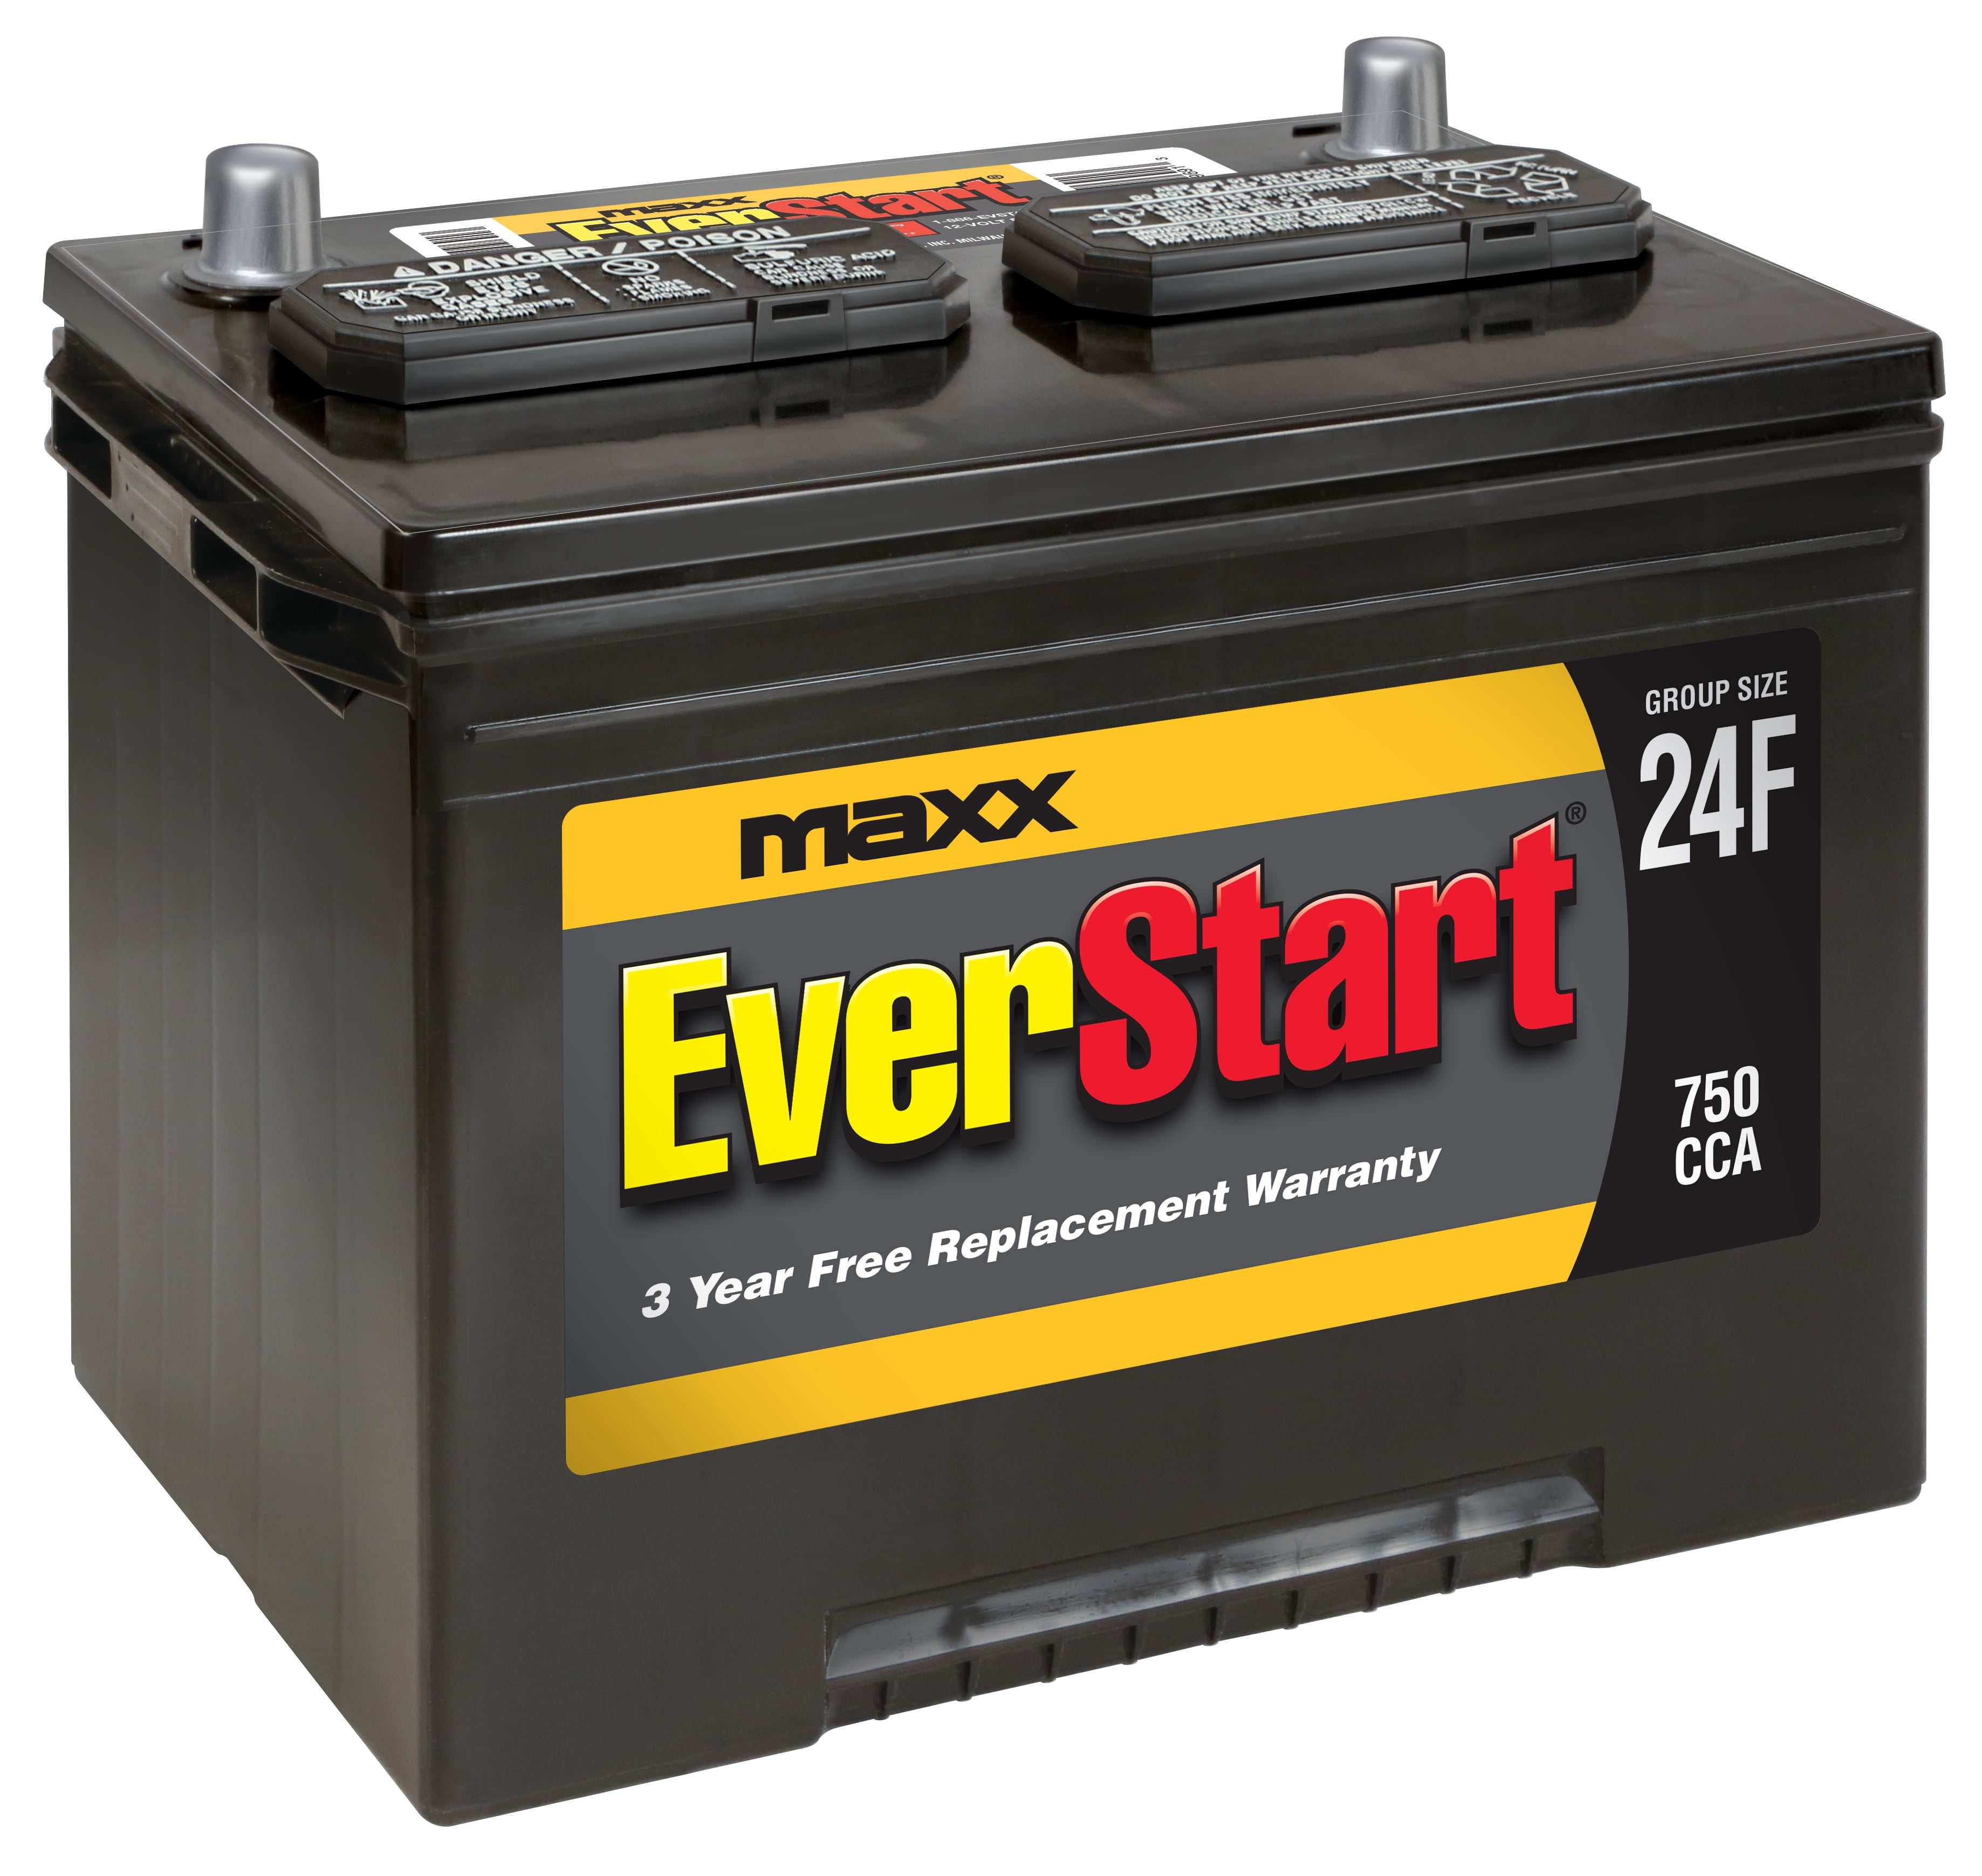 everstart-maxx-lead-acid-automotive-battery-group-size-24f-walmart